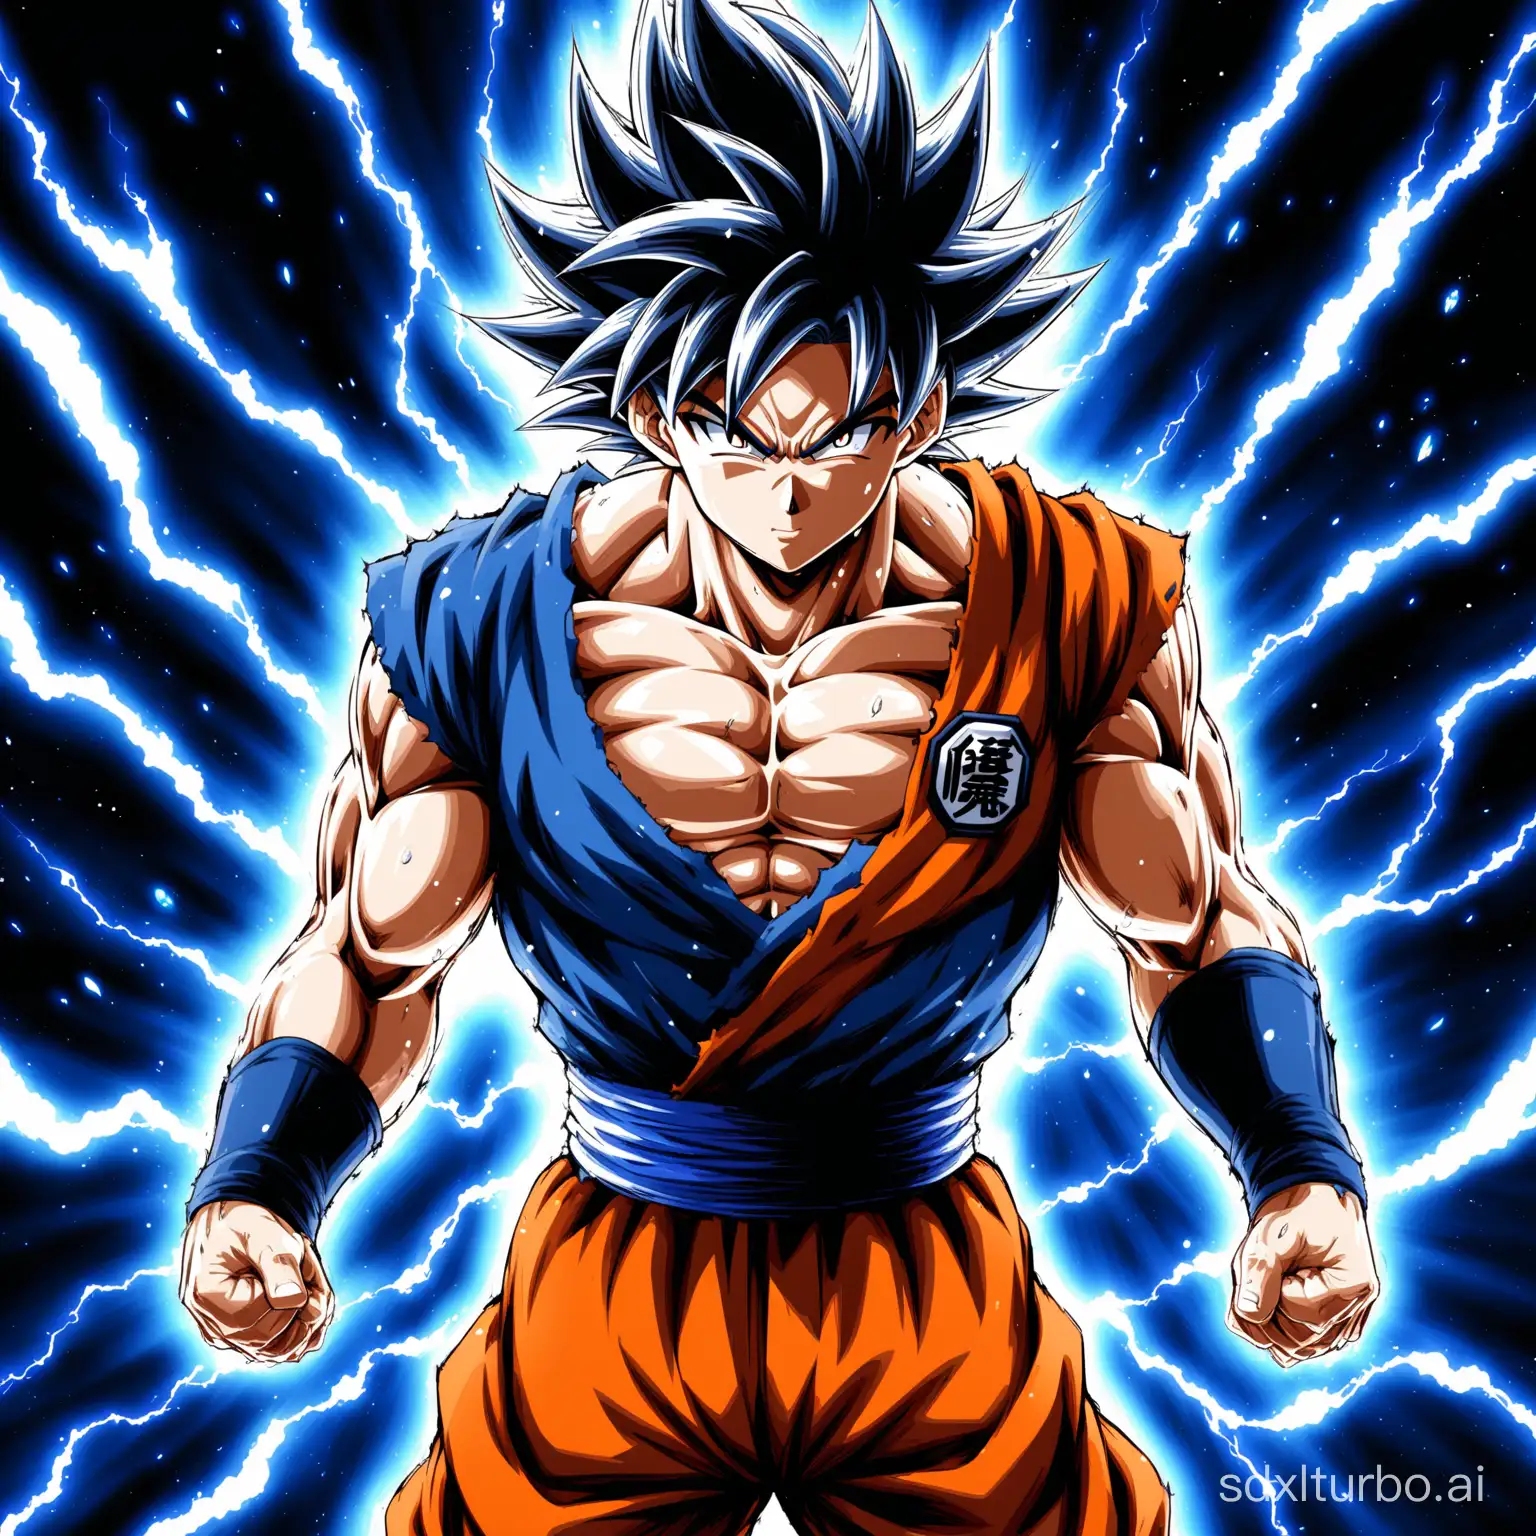 Powerful-Goku-Mastering-Ultra-Instinct-Form-in-Intense-Battle